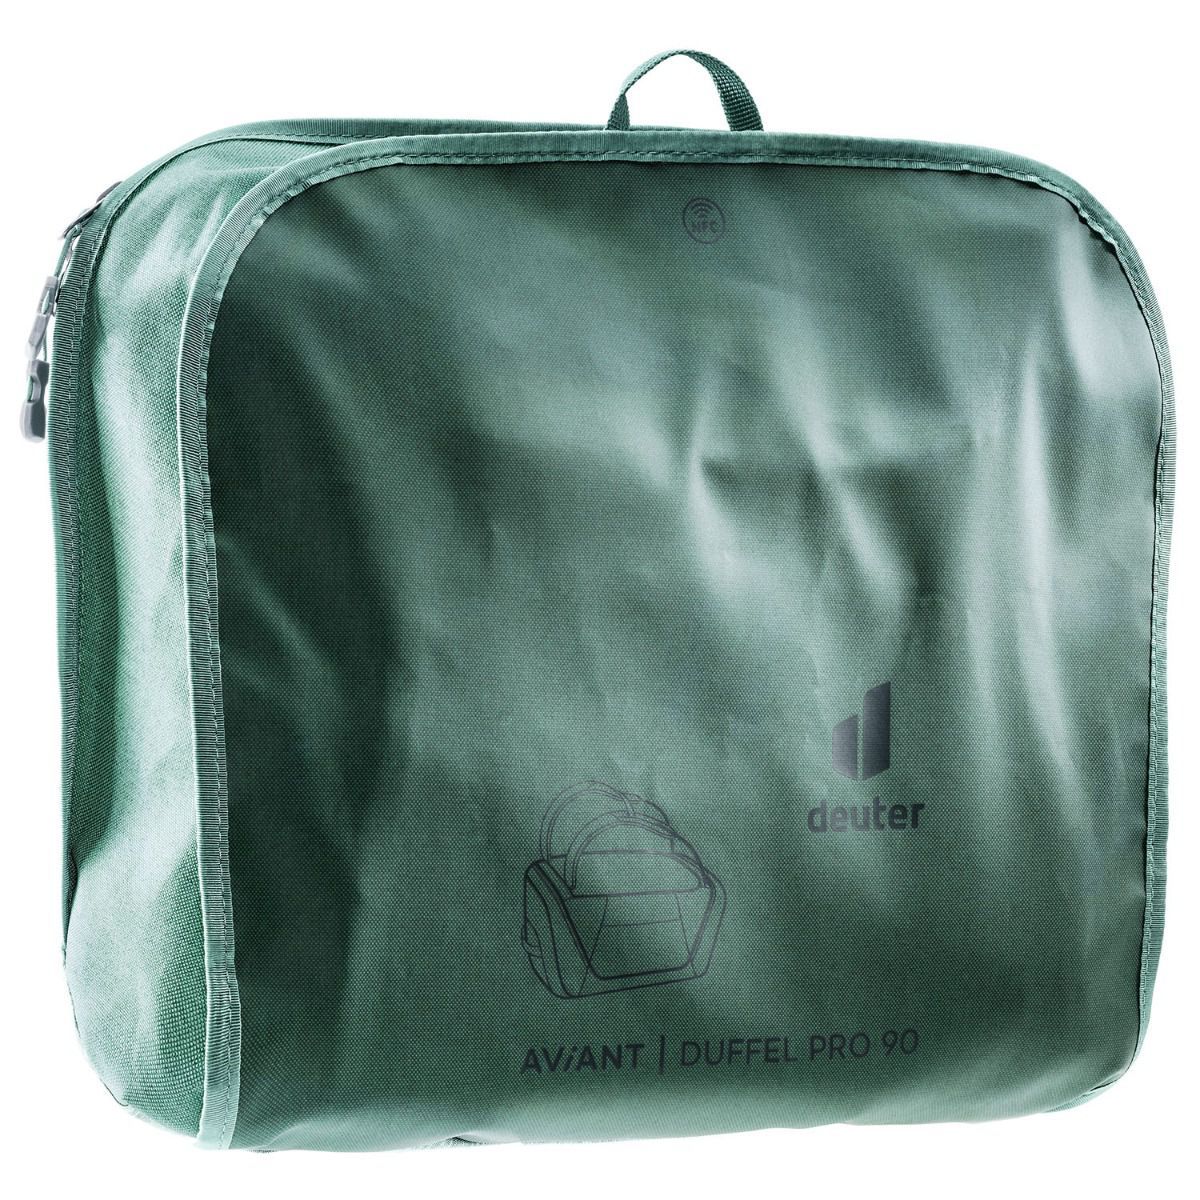 Deuter Aviant Pro Jade-Seagreen Sporttasche 90l